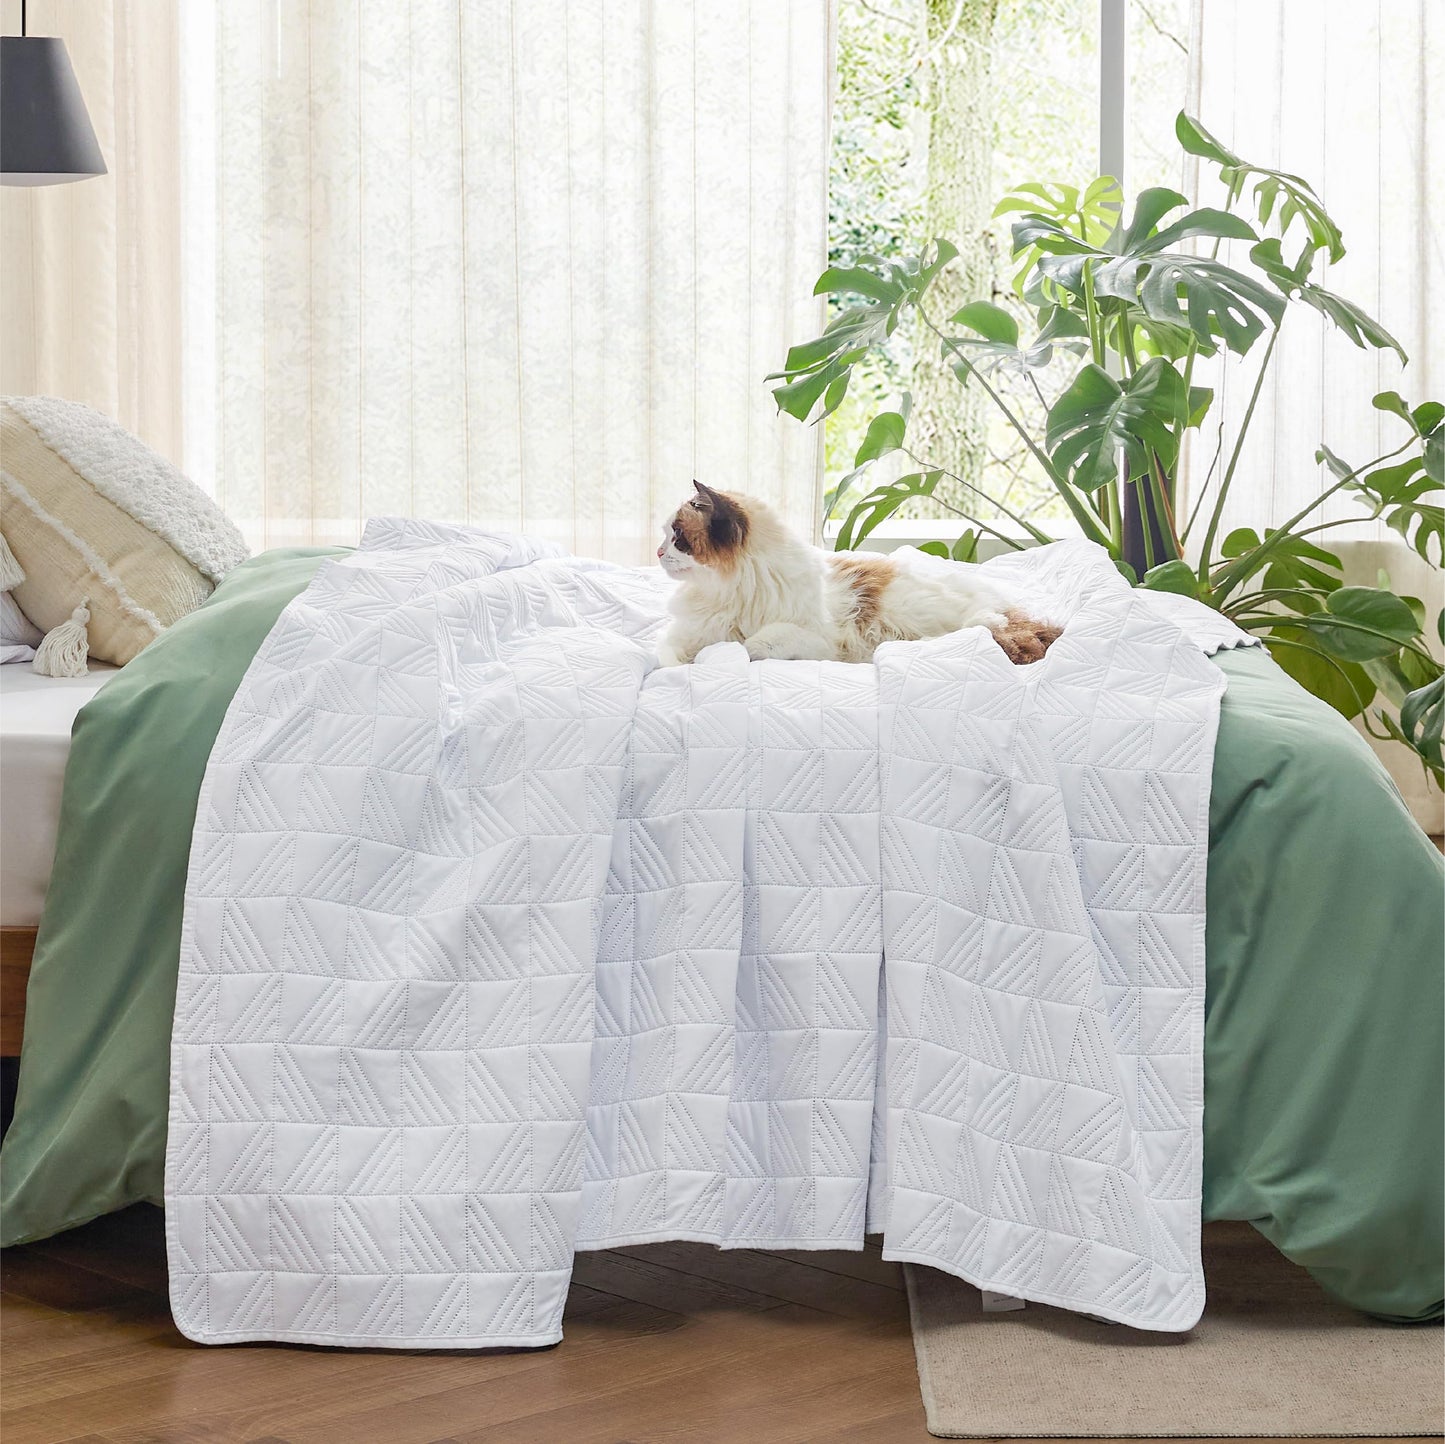 Bedsure Queen Quilt Bedding Set - Soft Ultrasonic Full/Queen Quilt Set - Geometric Bedspread Queen Size - Lightweight Bedding Coverlet for All Seasons (Includes 1 Red Orange Quilt, 2 Pillow Shams)